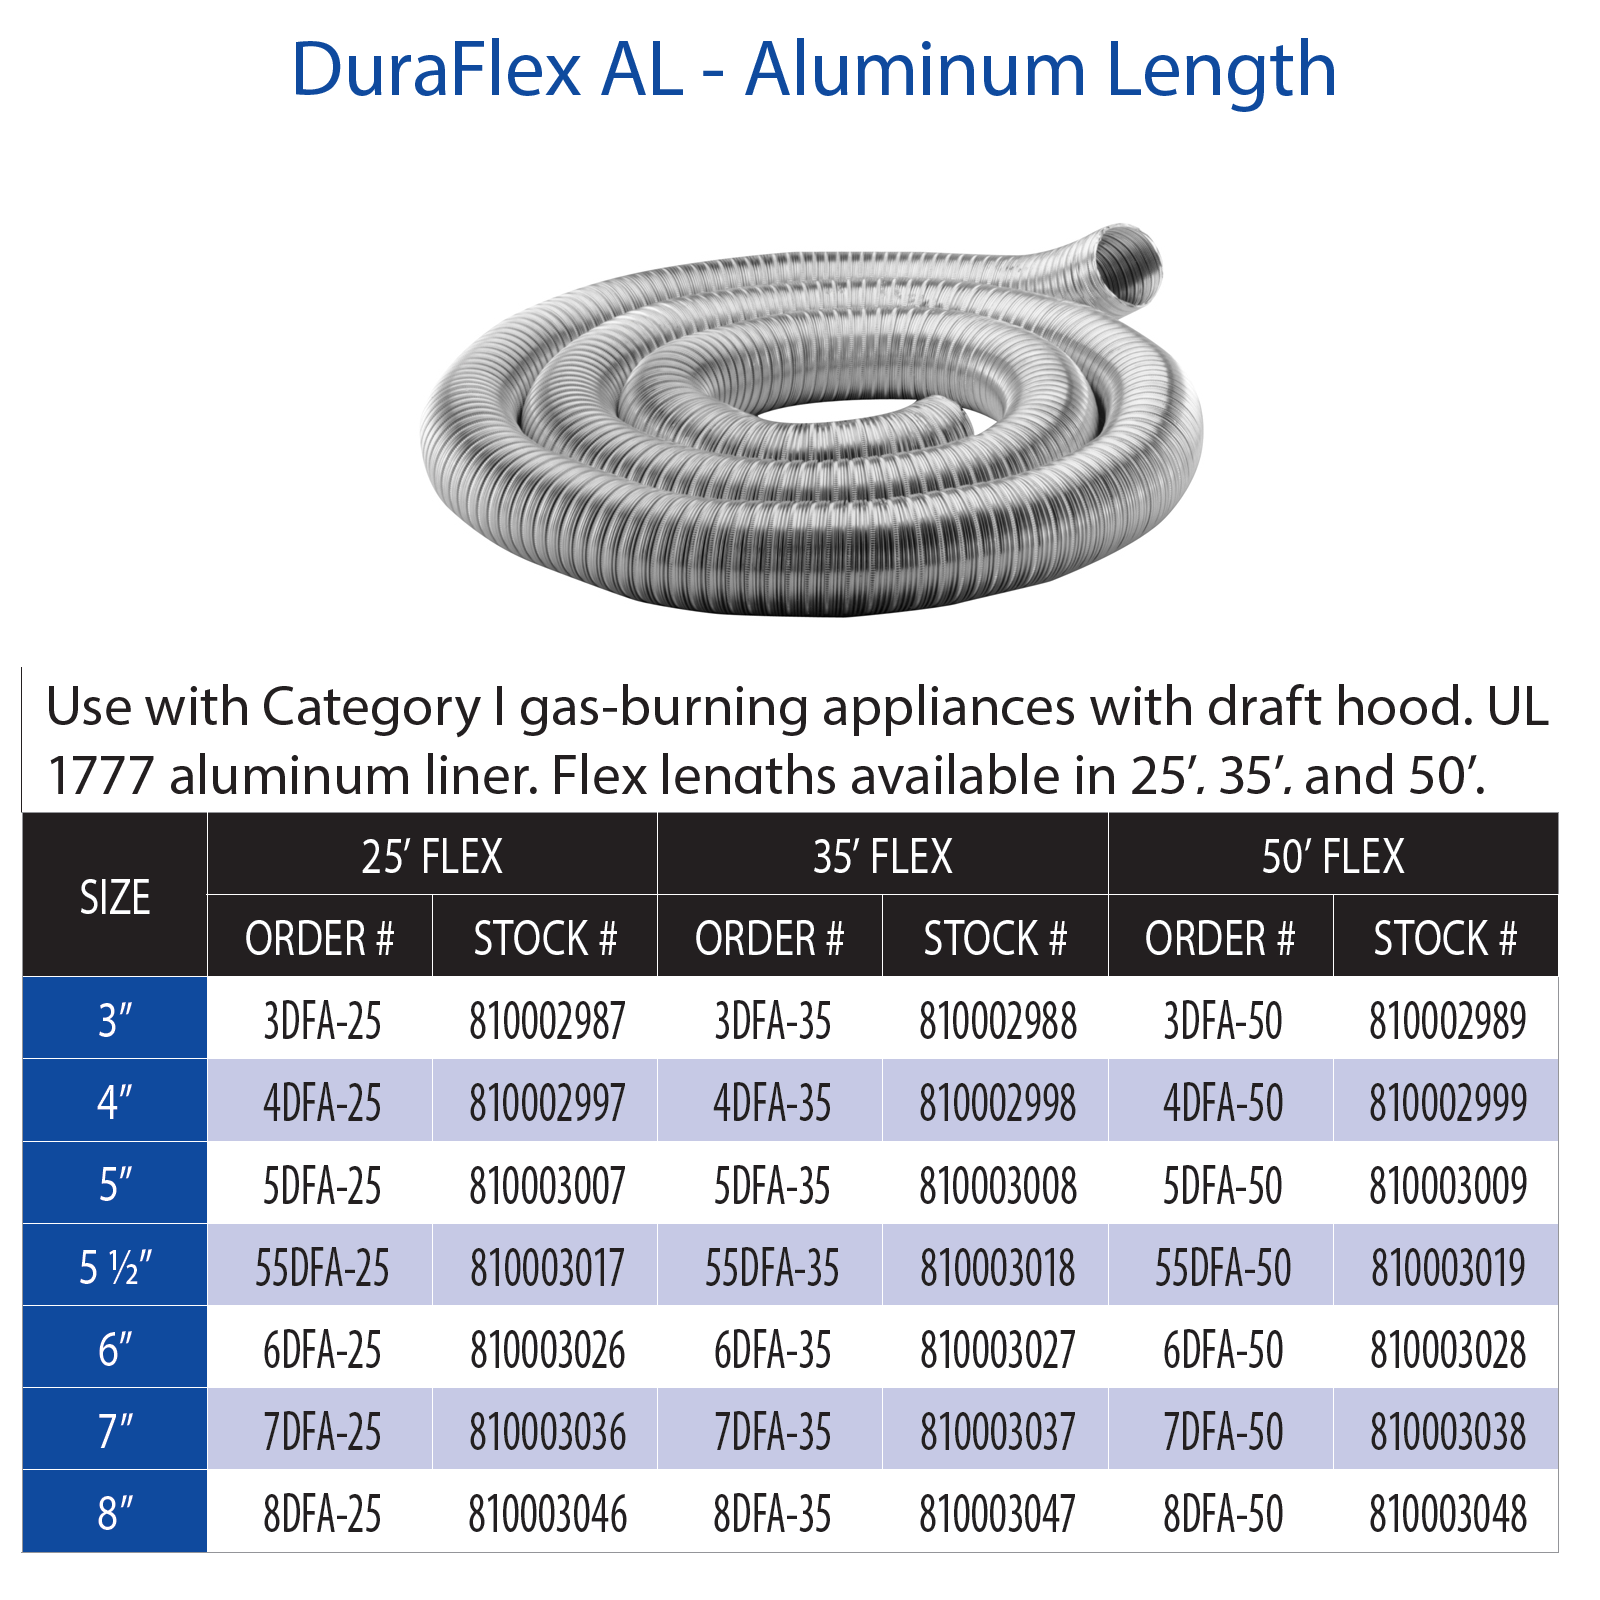 DuraVent DirectVent Pro Aluminum Flex Length 4 Inch x 35' | 4DFA-35